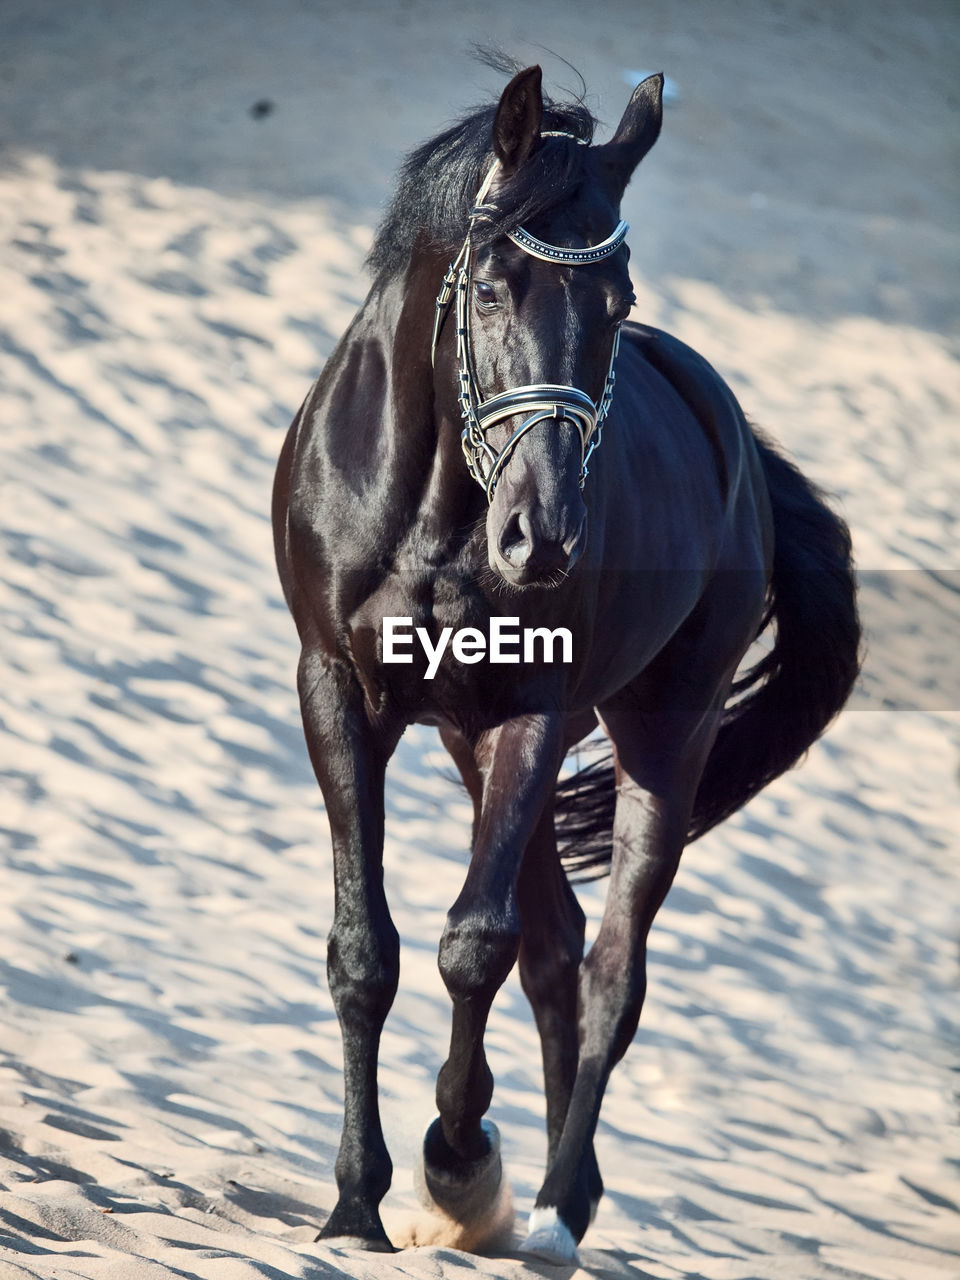 Black horse walking on sand